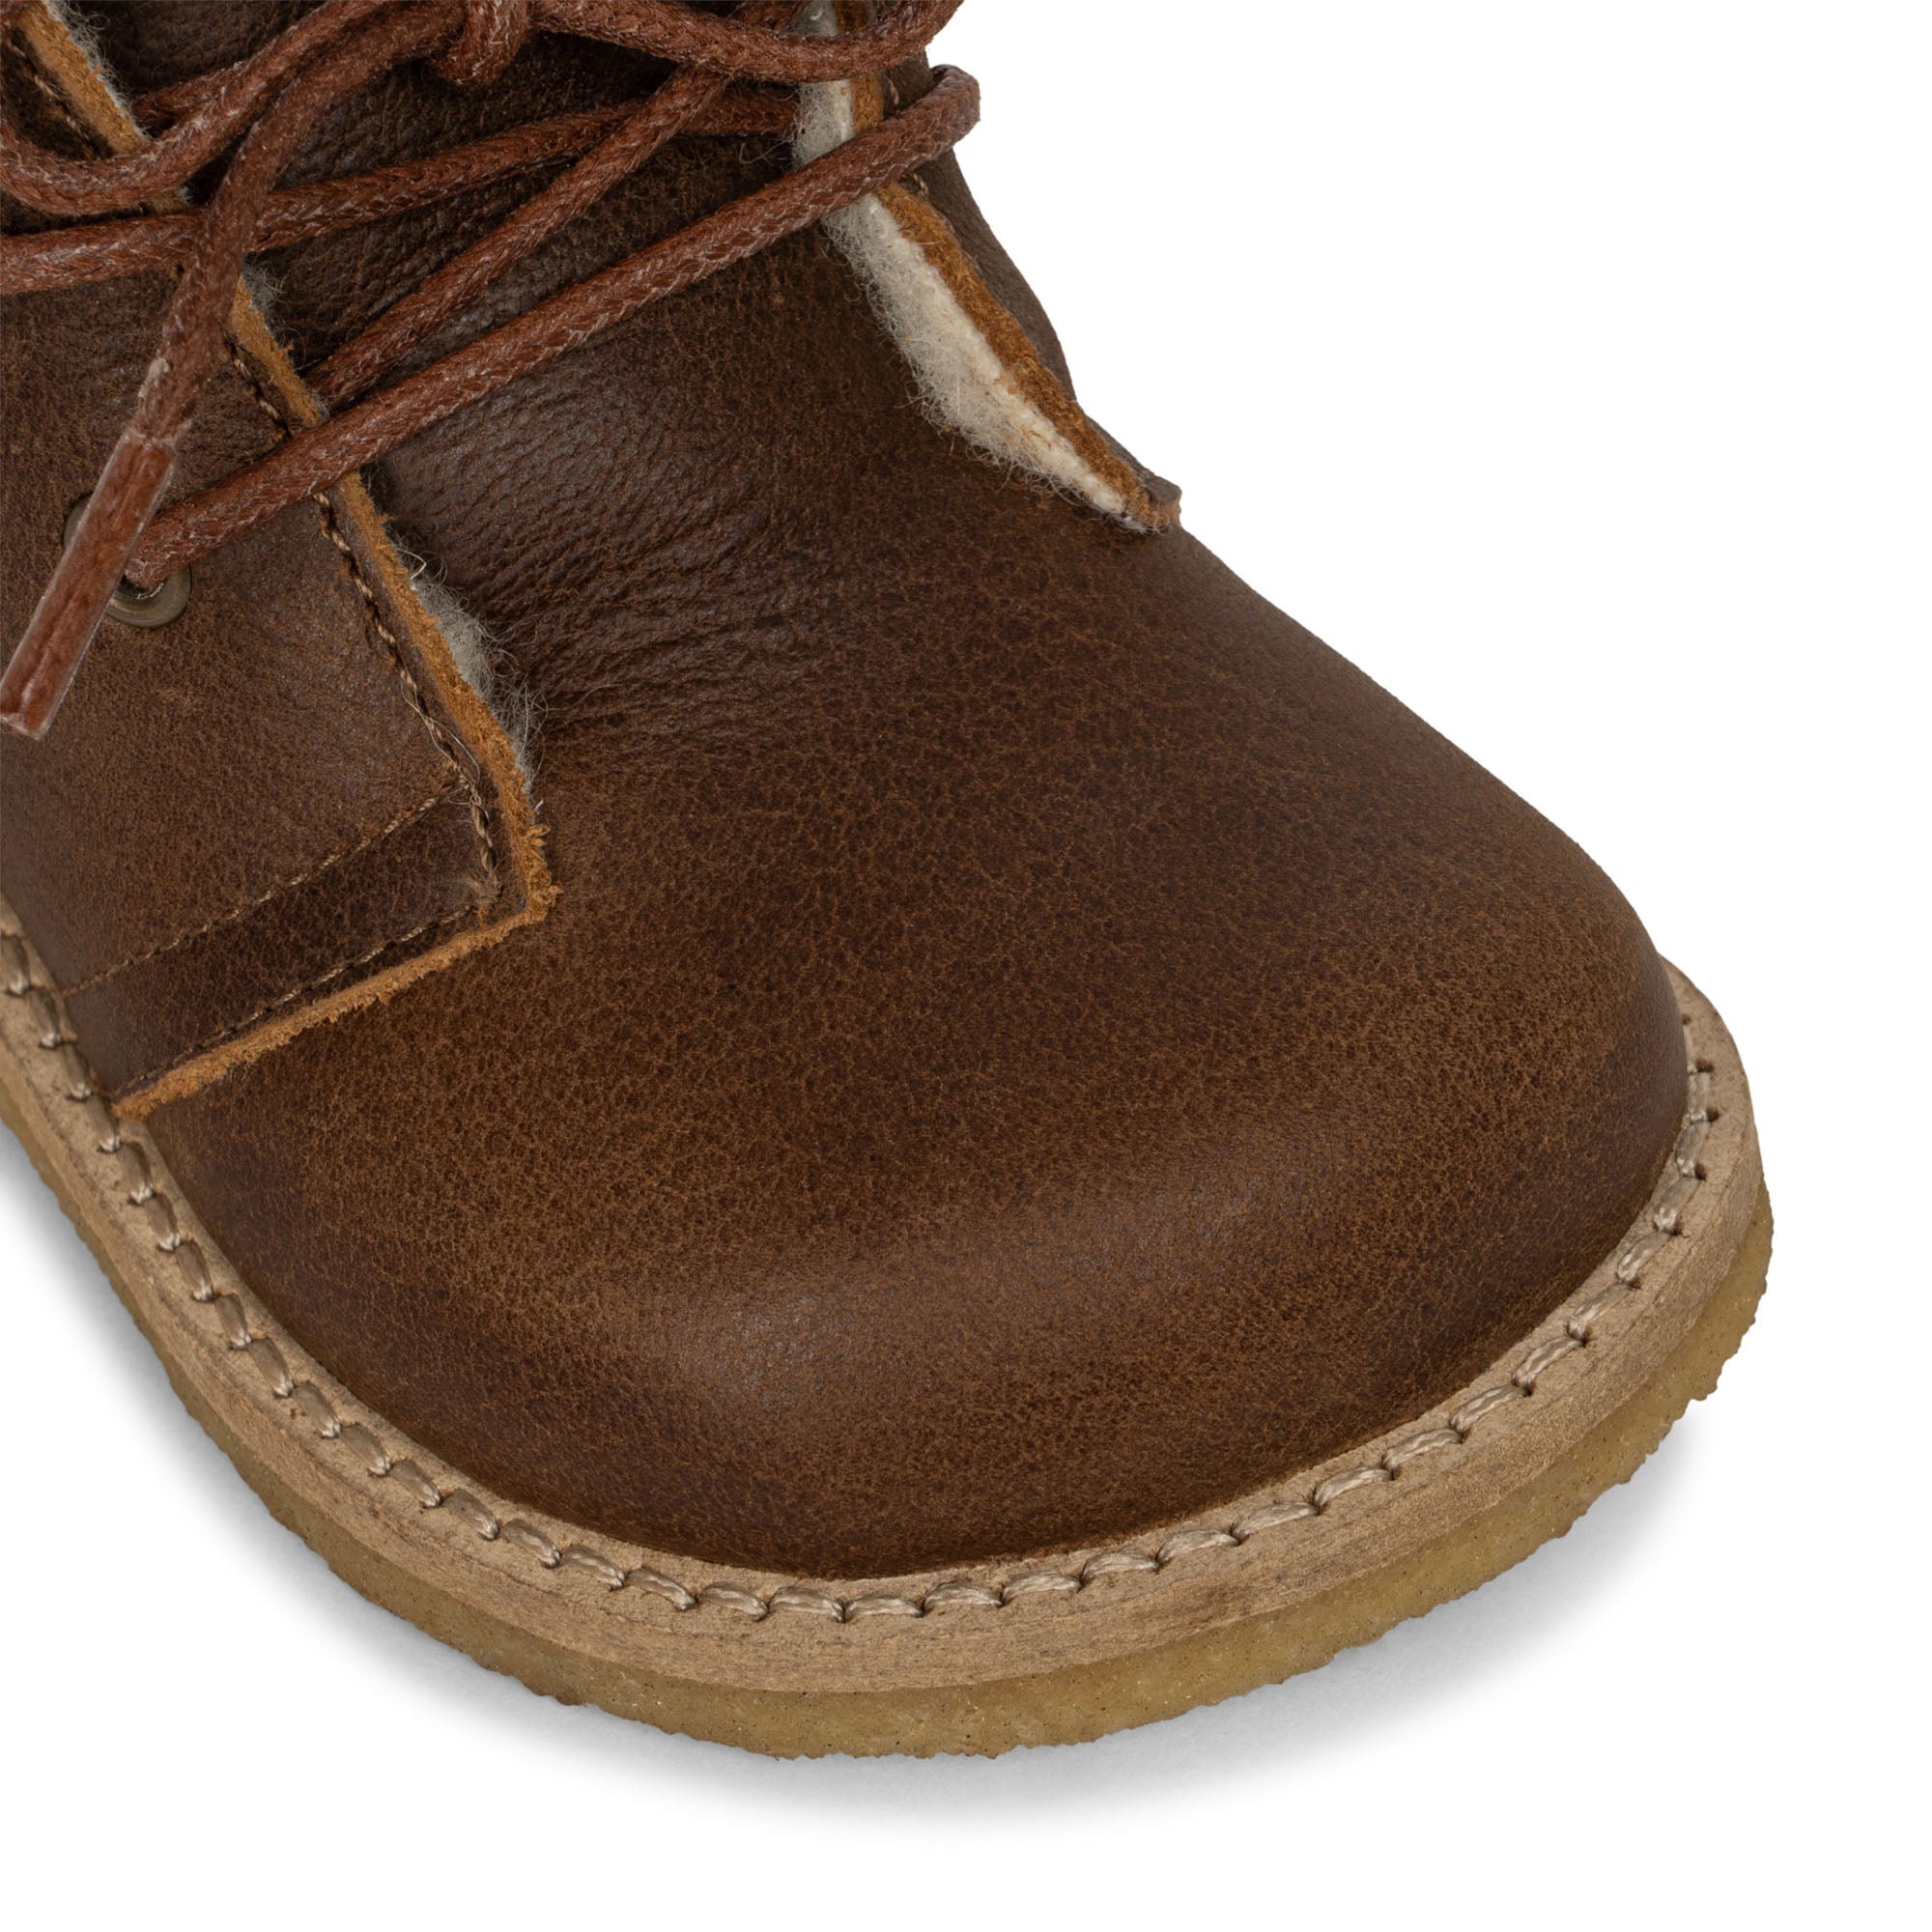 Konges Sløjd A/S Woolie Leather Desert Boots Tex Beginner shoes COGNAC